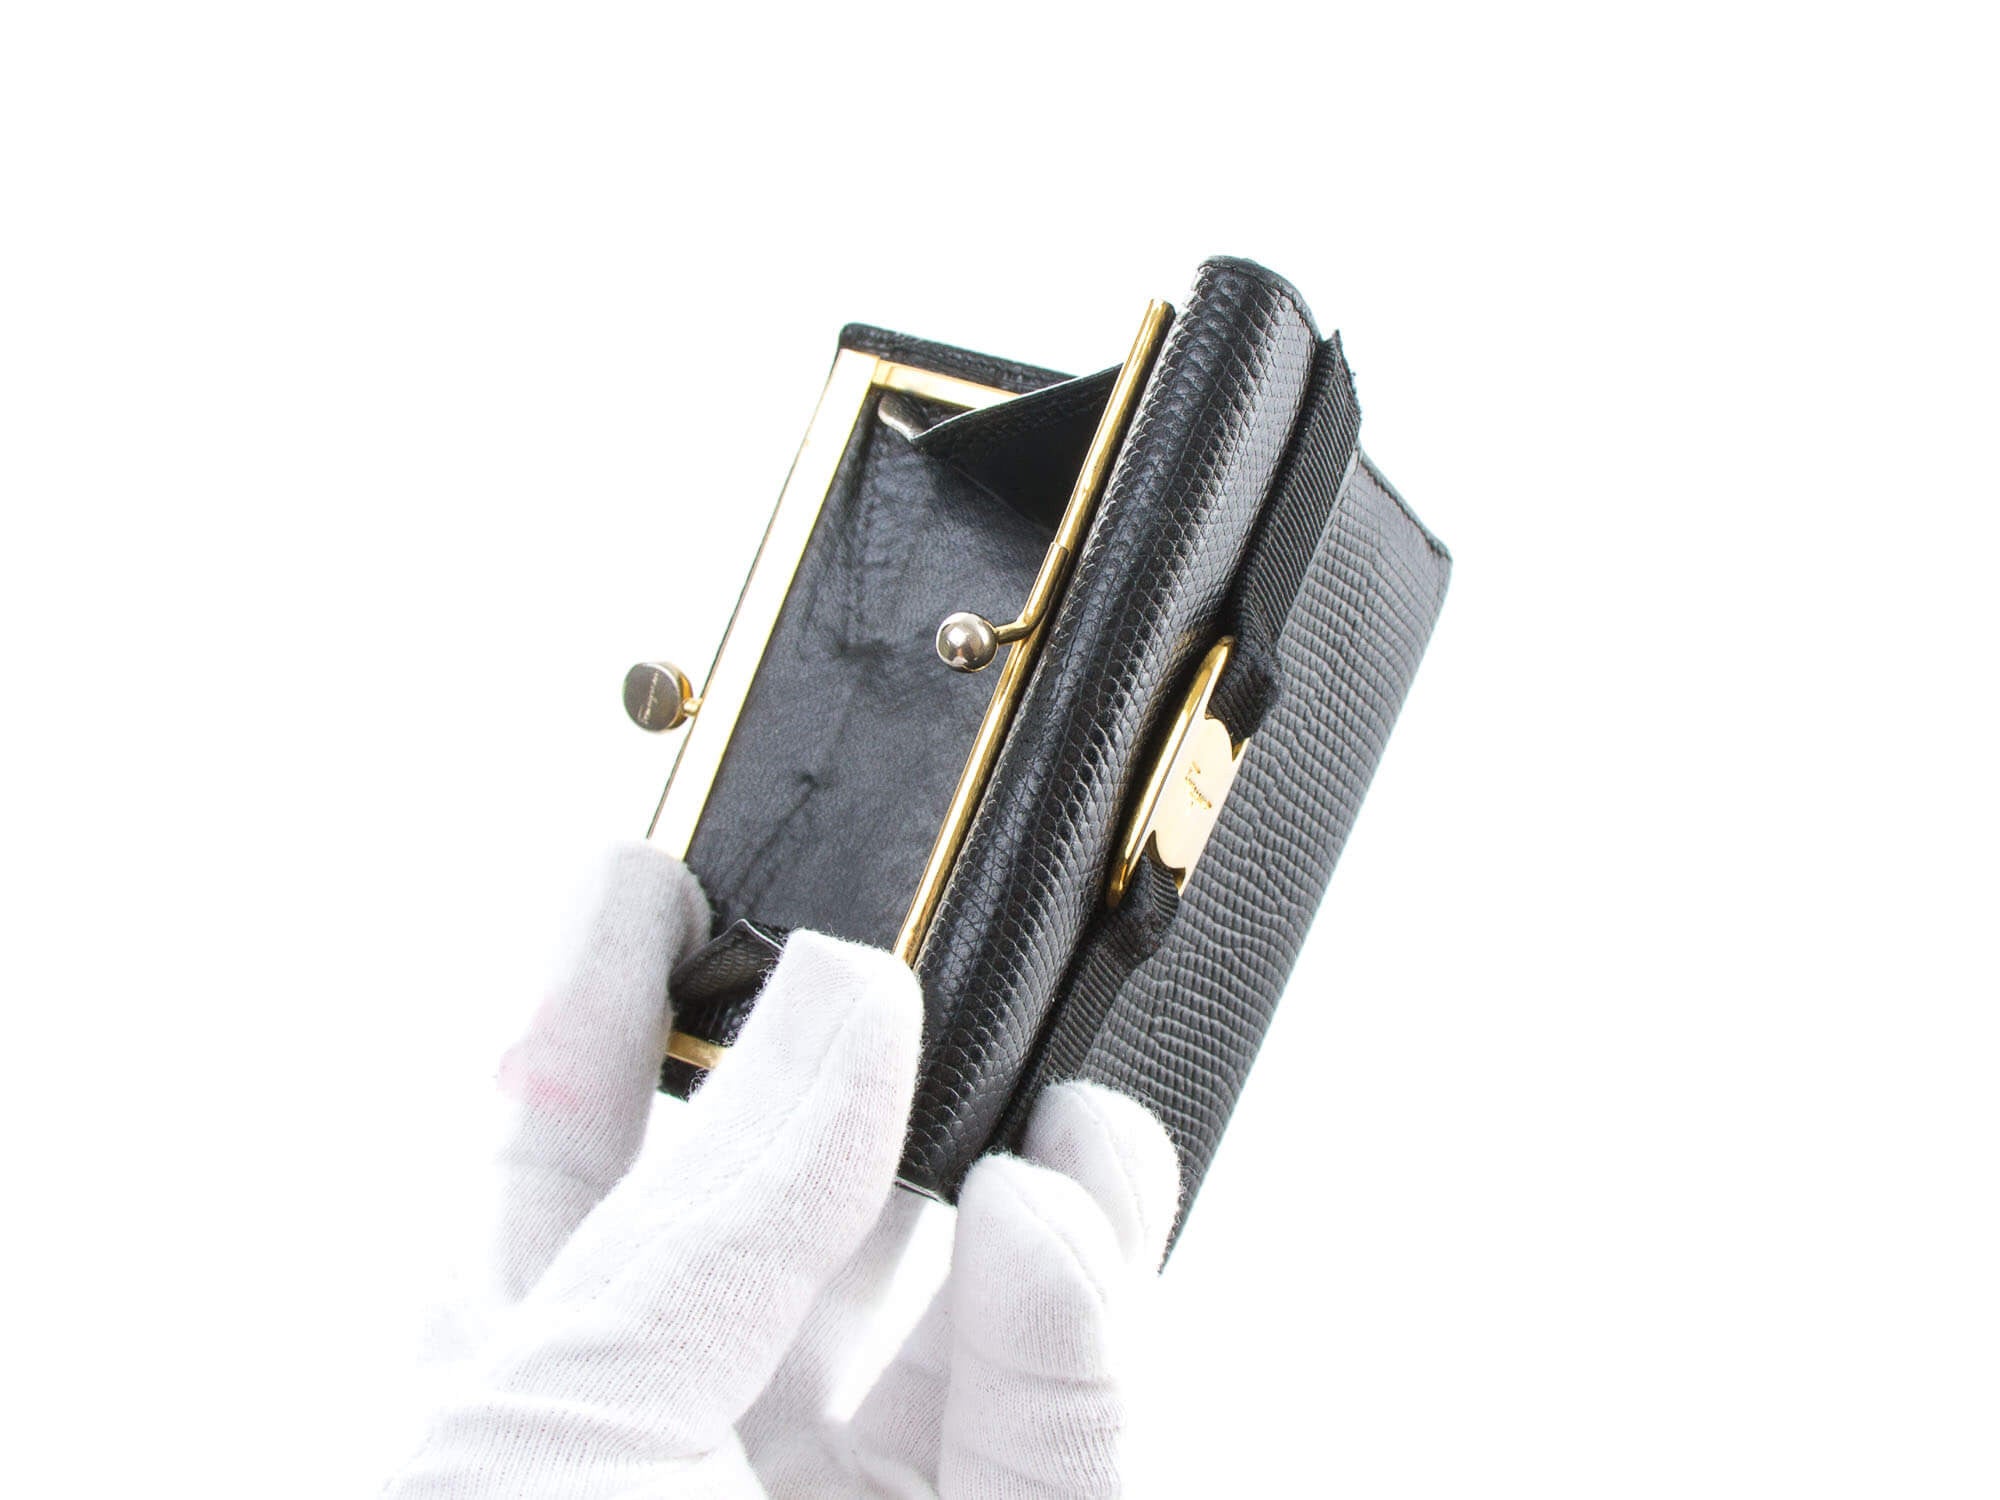 Salvatore Ferragamo Leather Compact Kiss-lock Bifold Wallet Black